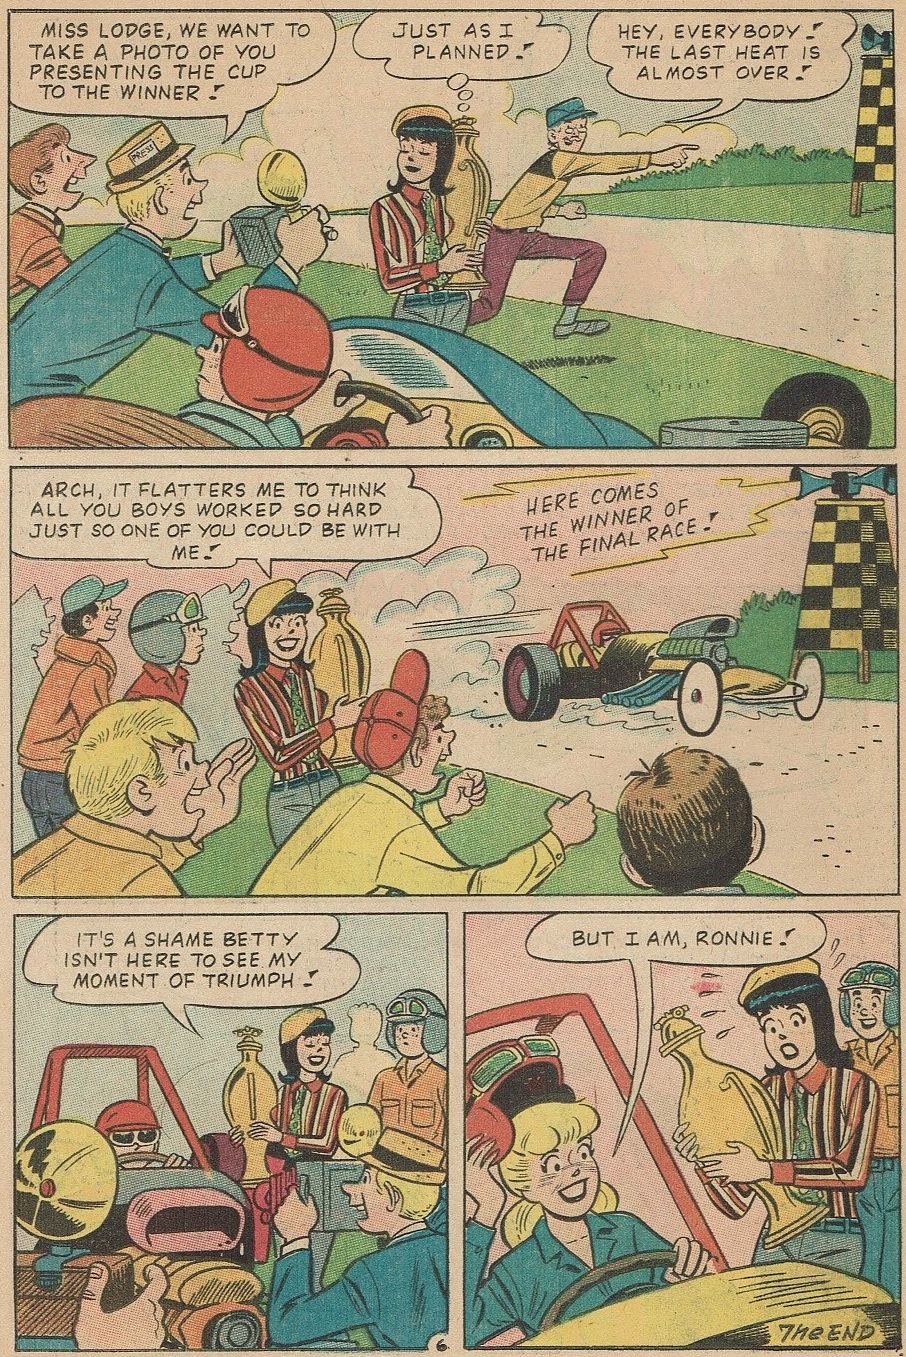 Betty wins the race